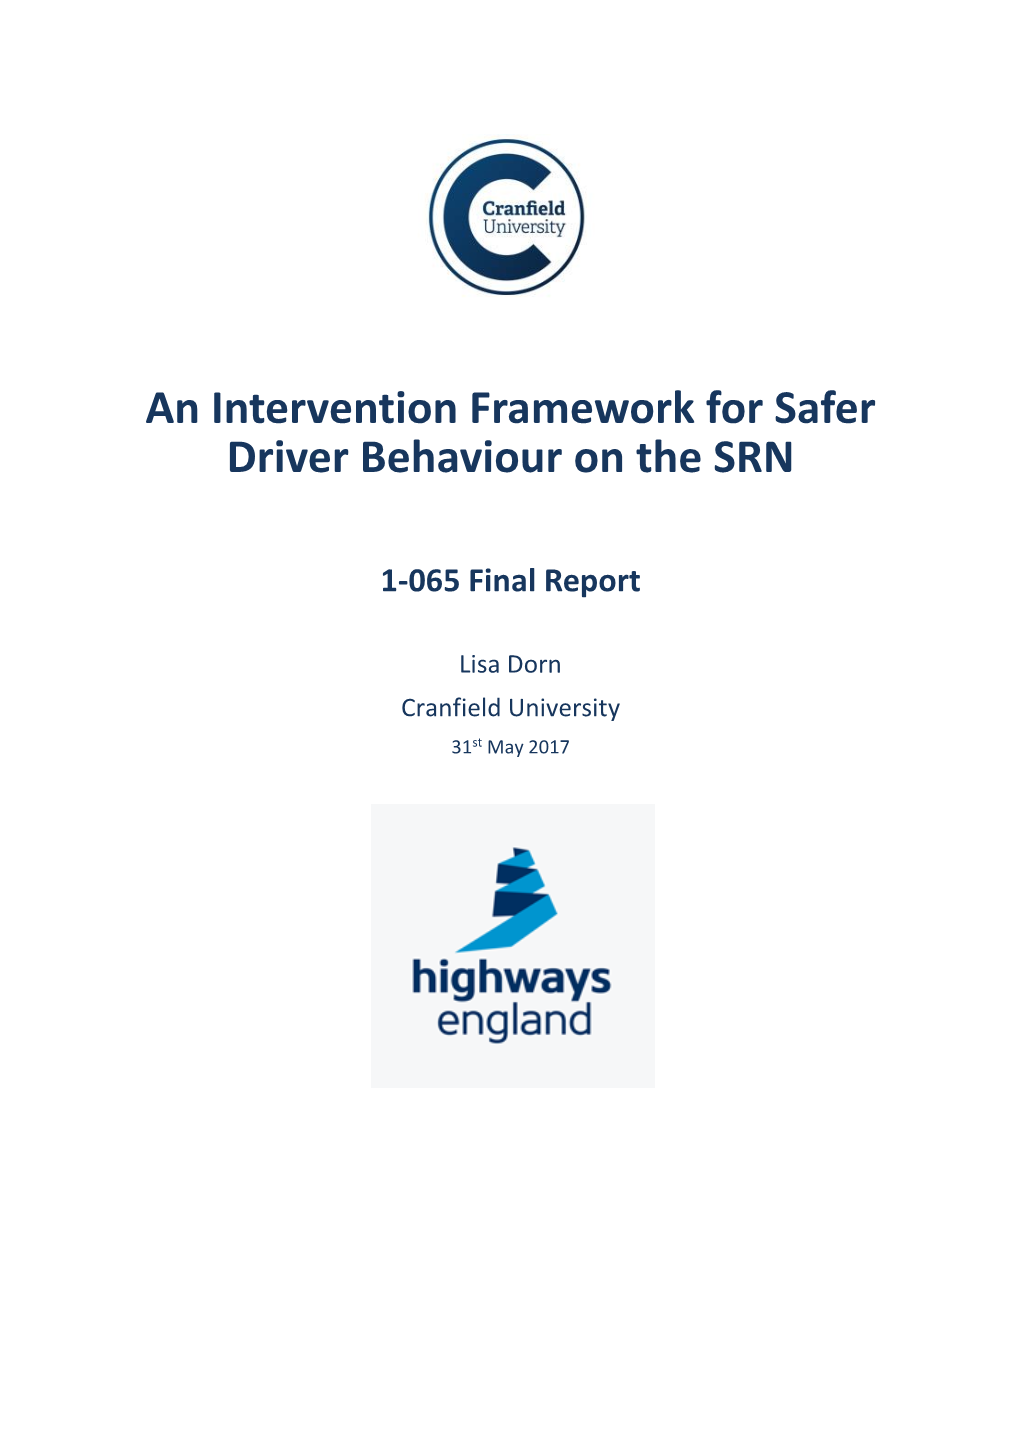 An Intervention Framework for Safer Driver Behaviour on the SRN